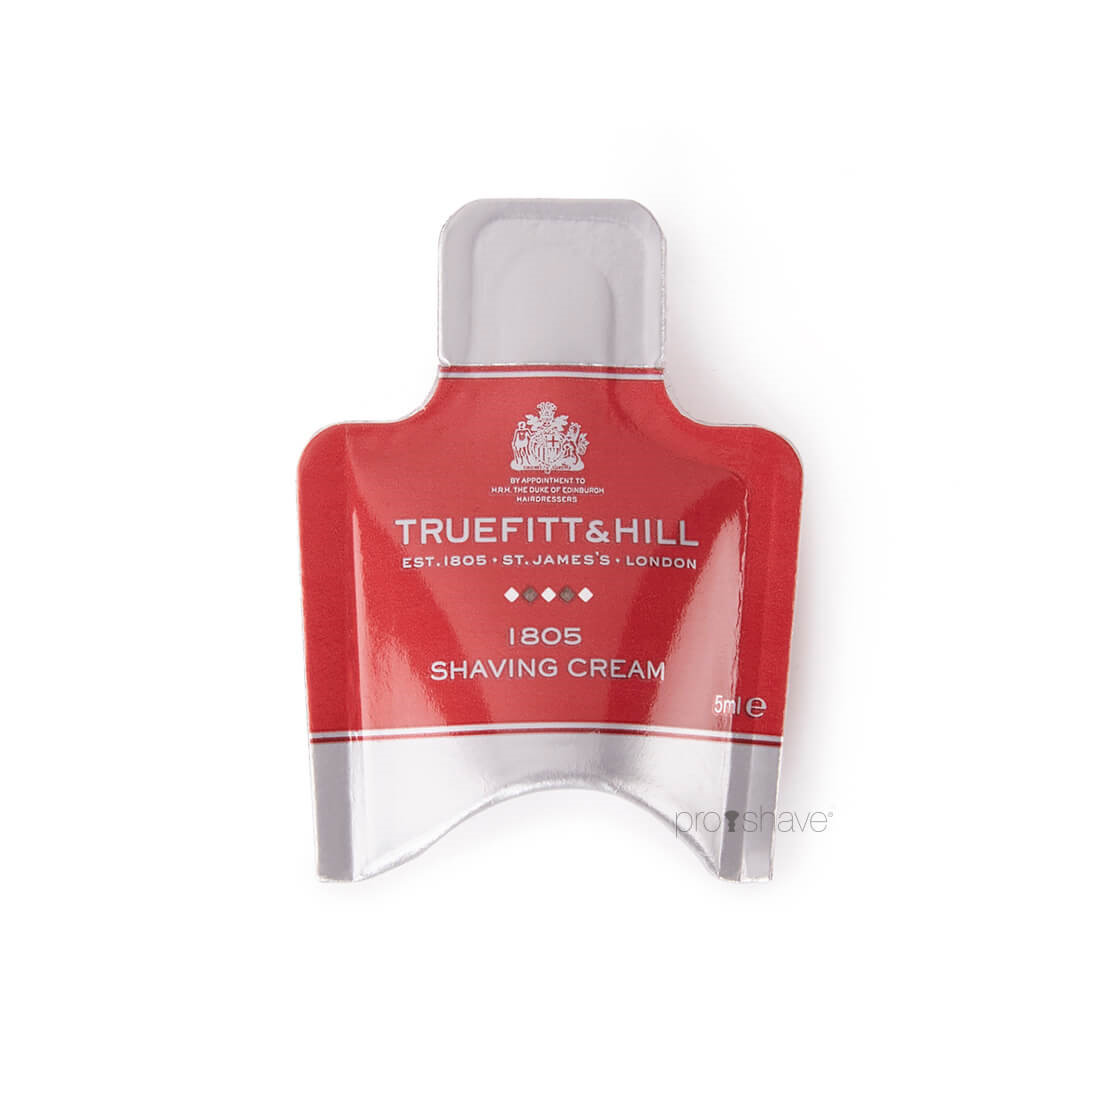 12: Truefitt & Hill 1805 Shaving Cream Sample Pack, 5 ml.